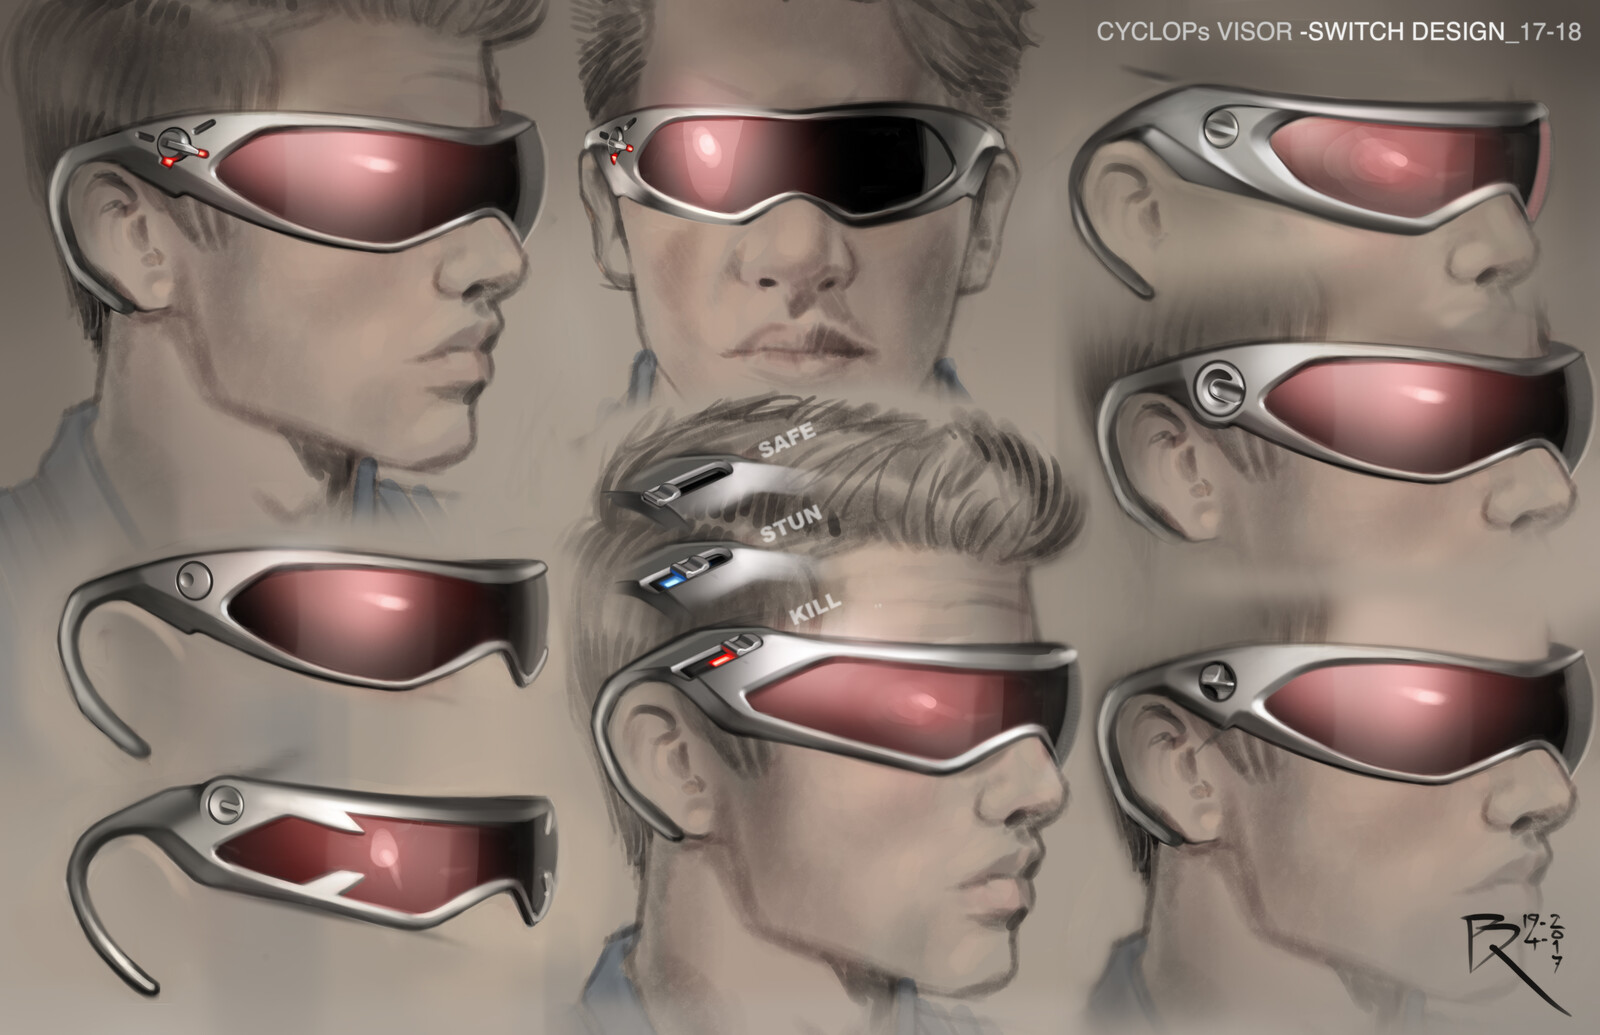 Cyclops' Visor-Switch Design 17-18